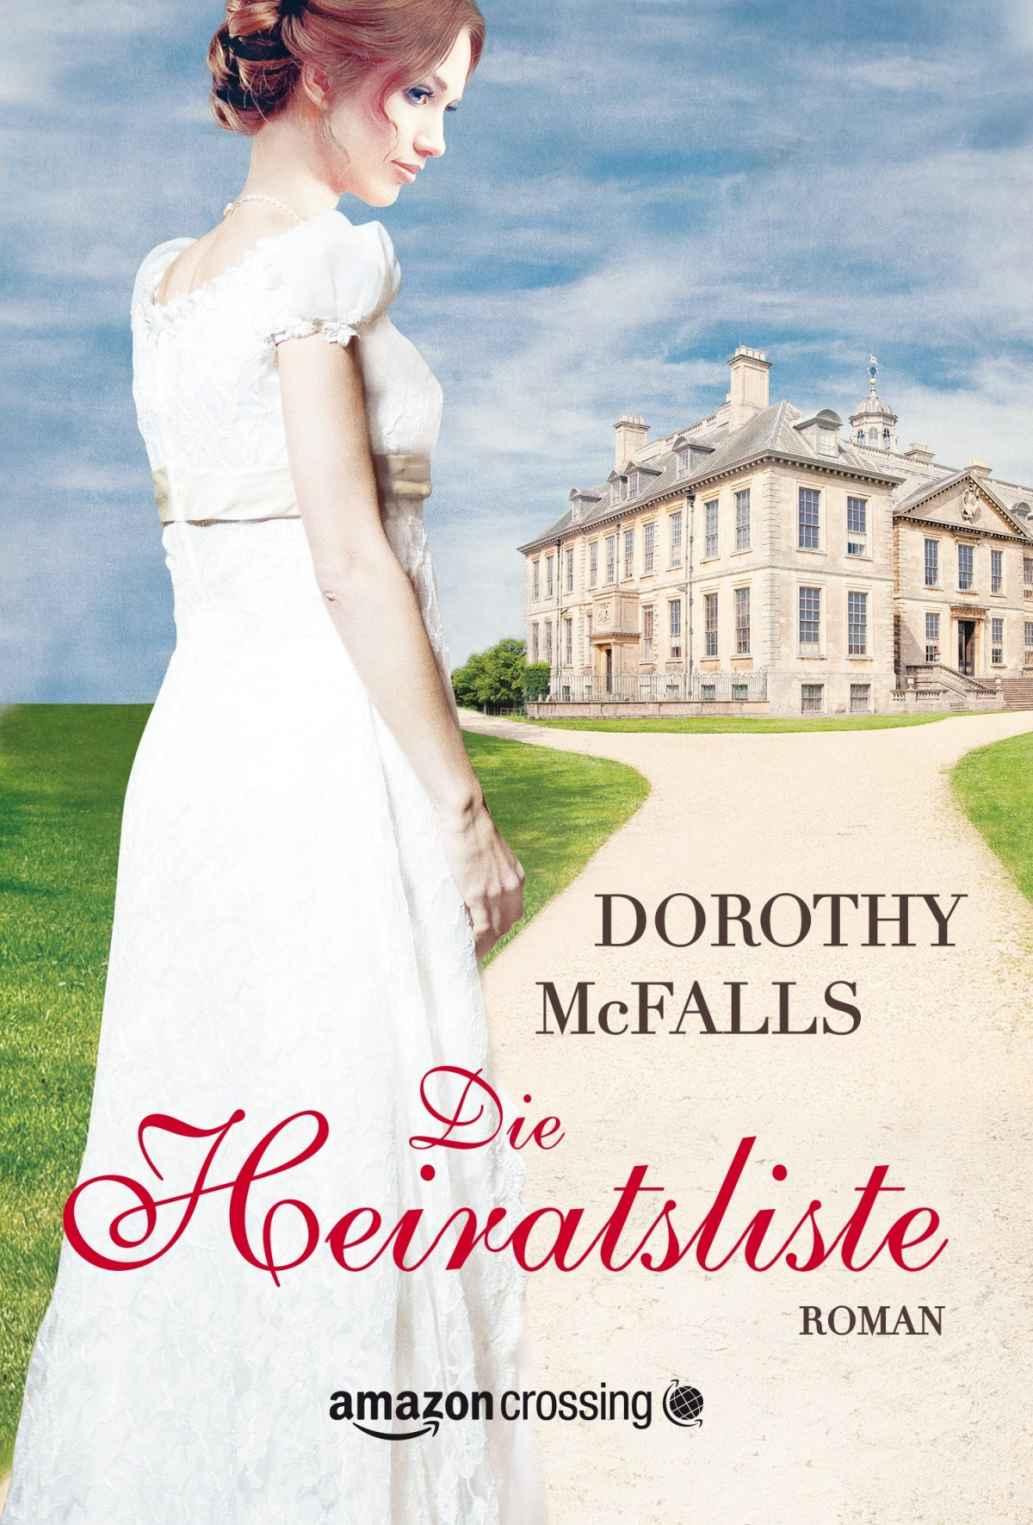 Die Heiratsliste by Dorothy McFalls